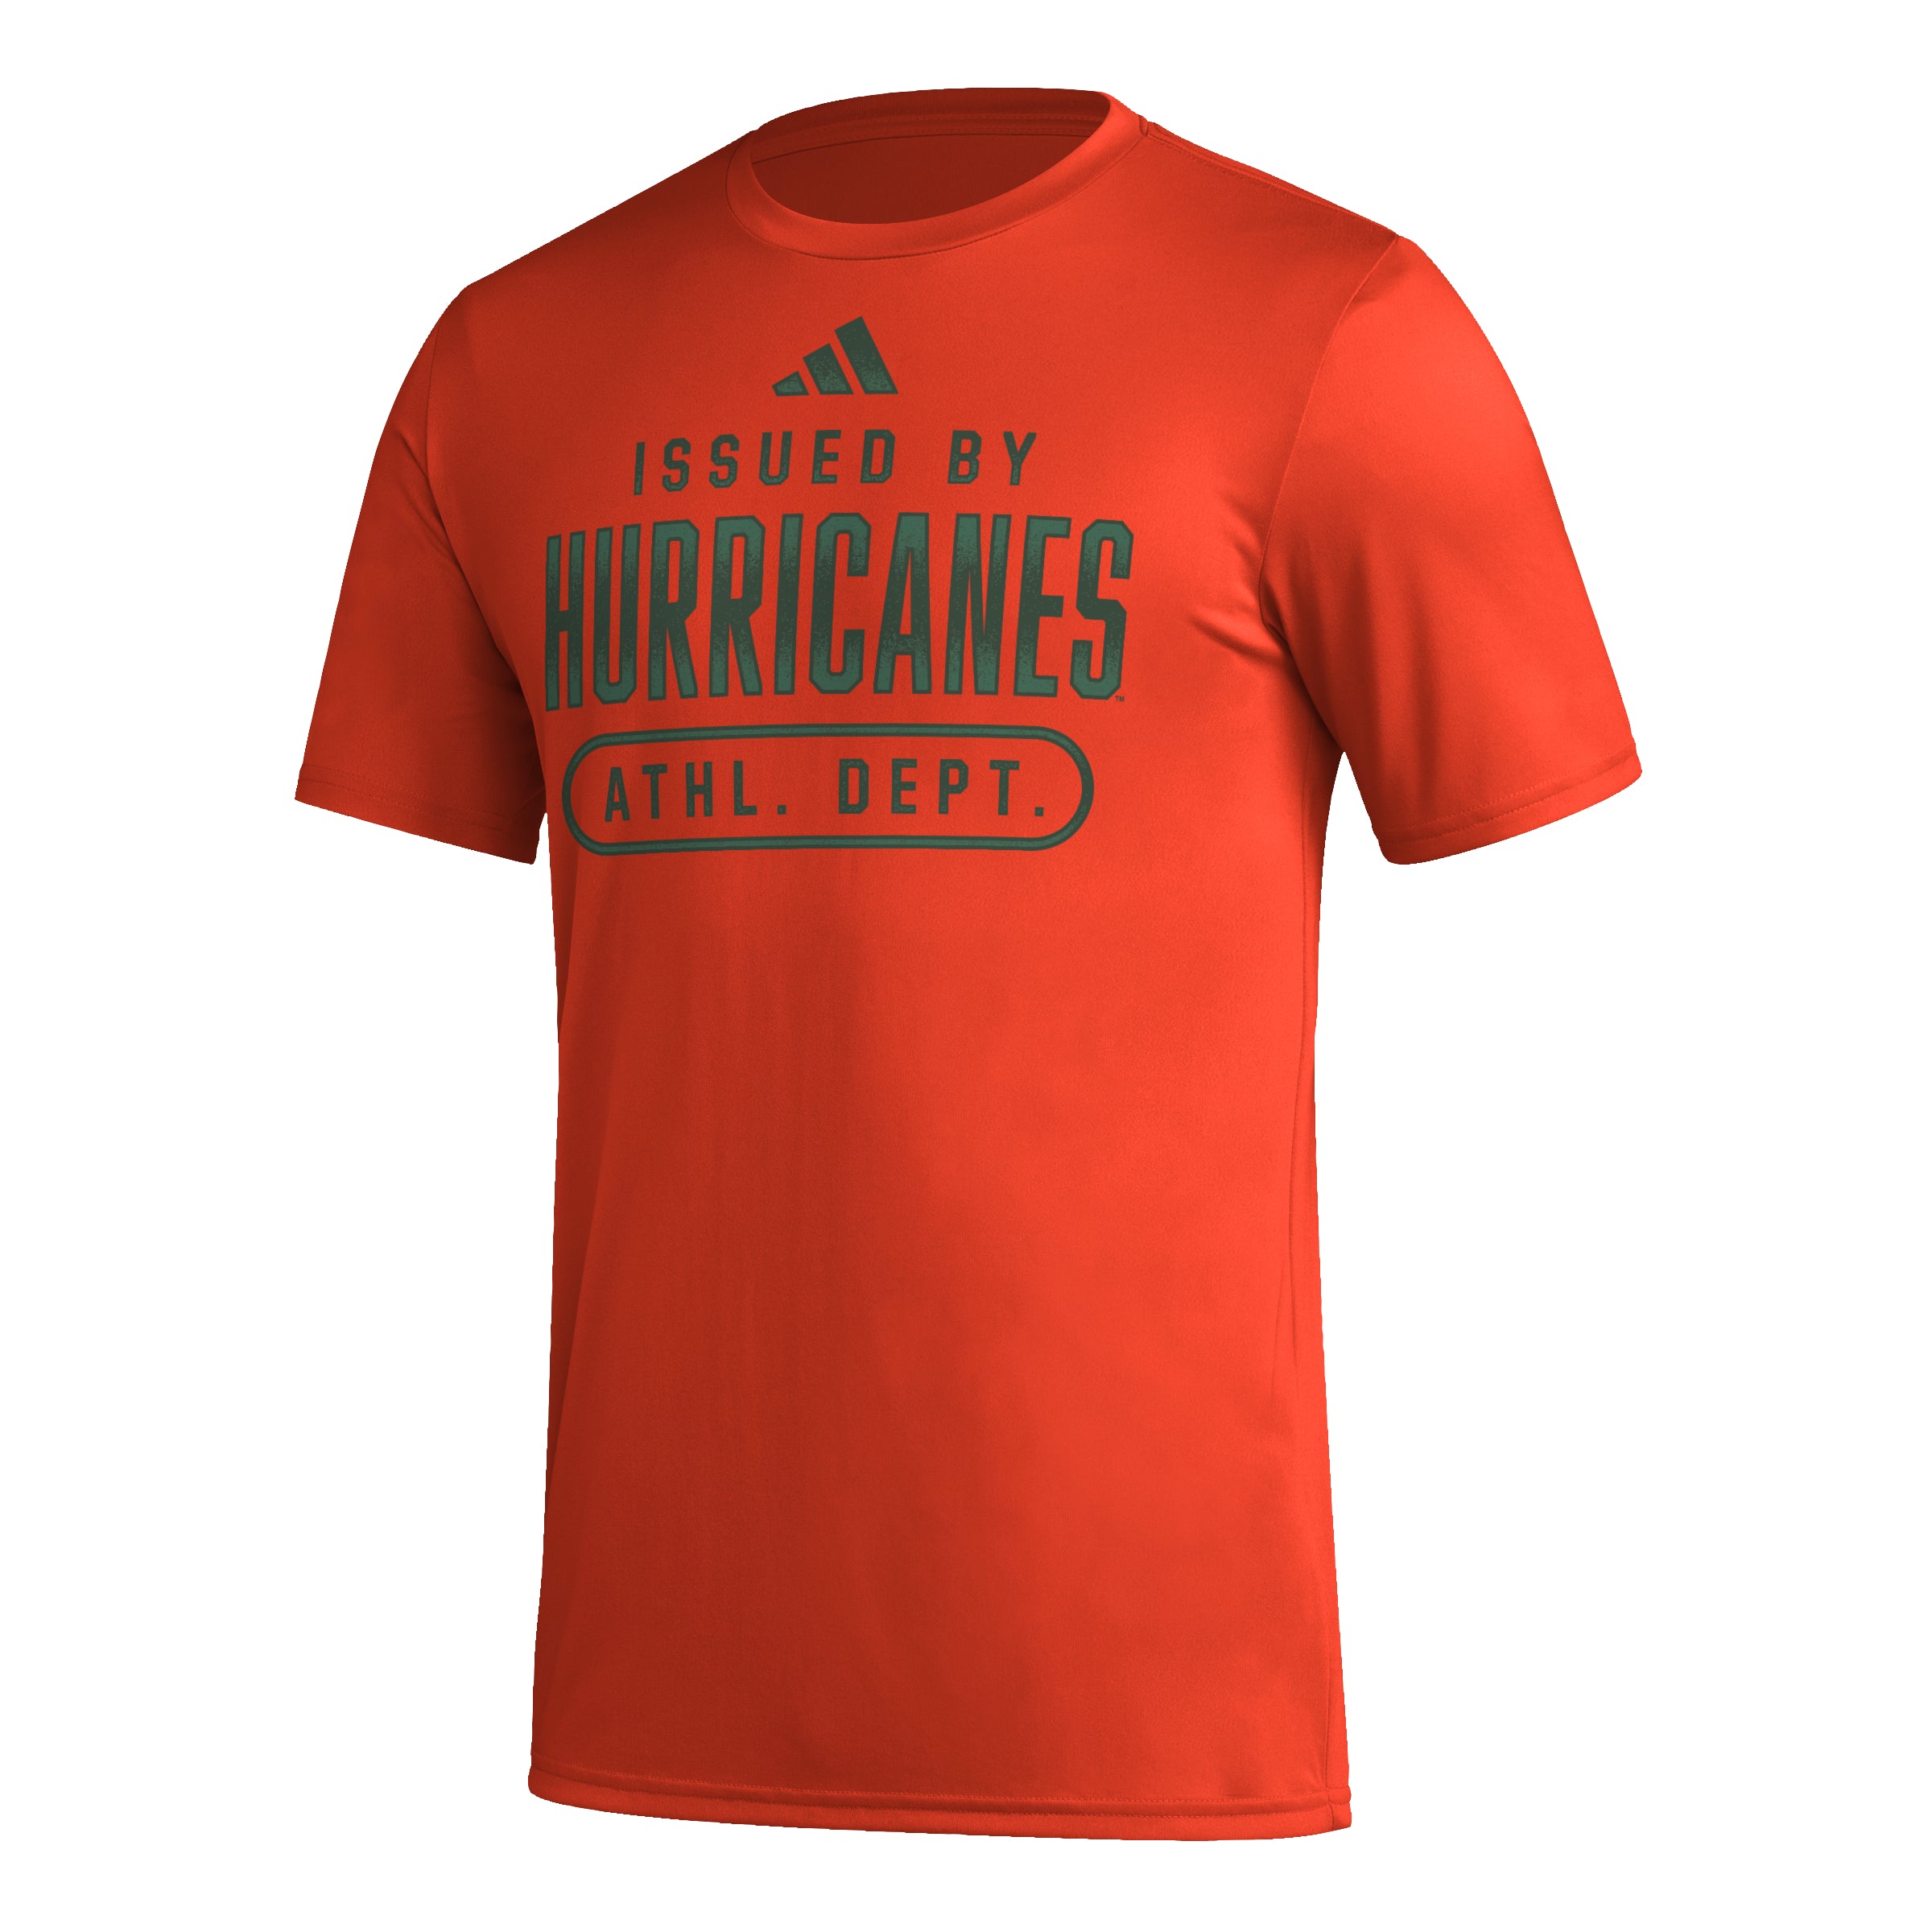 Miami Hurricanes adidas Aeroready Pregame Issued By T-Shirt - Orange